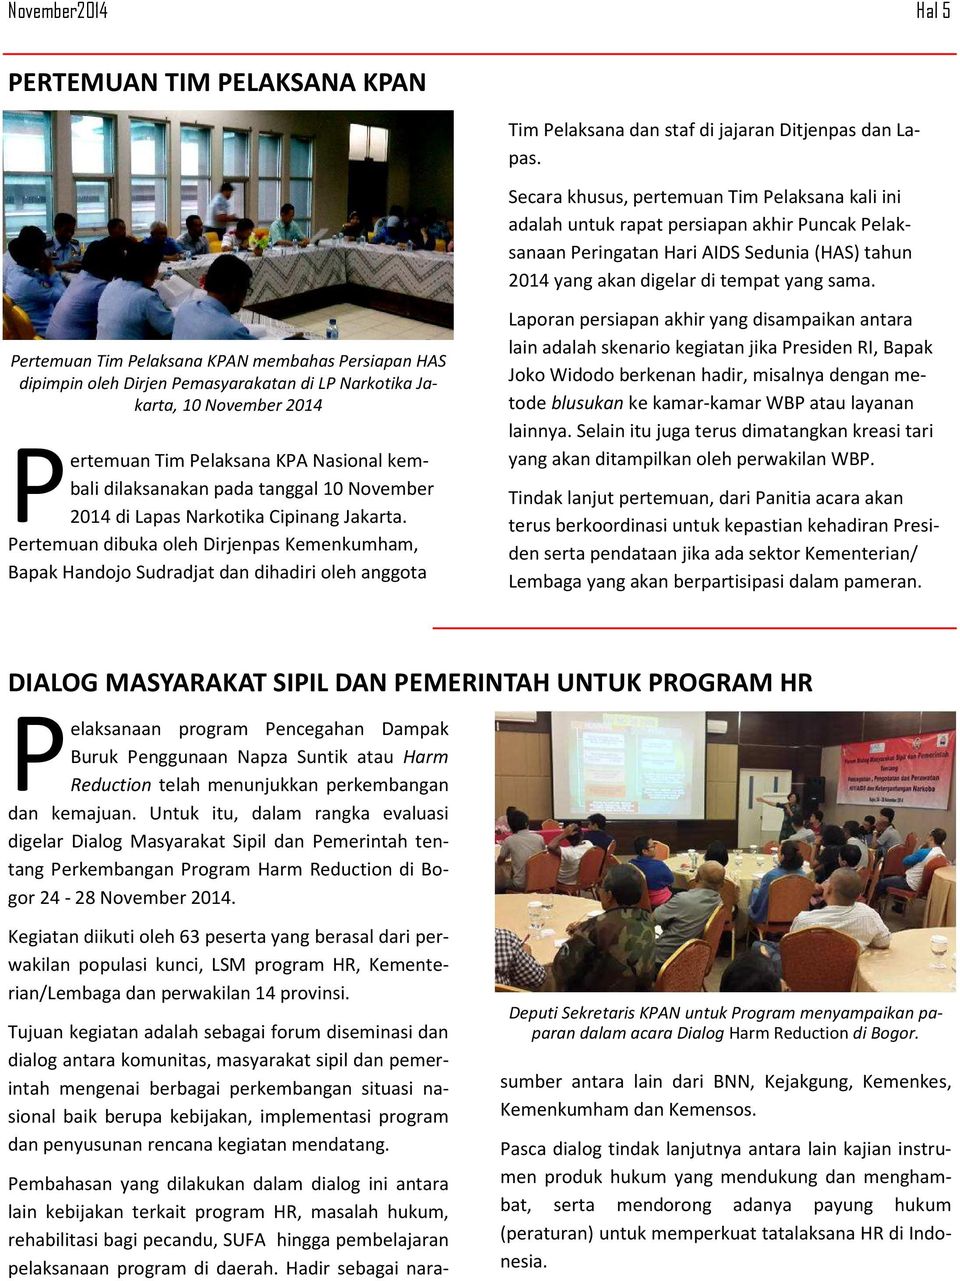 ertemuan Tim elaksana KAN membahas ersiapan HAS dipimpin oleh Dirjen emasyarakatan di L Narkotika Jakarta, 10 November 2014 ertemuan Tim elaksana KA Nasional kembali dilaksanakan pada tanggal 10